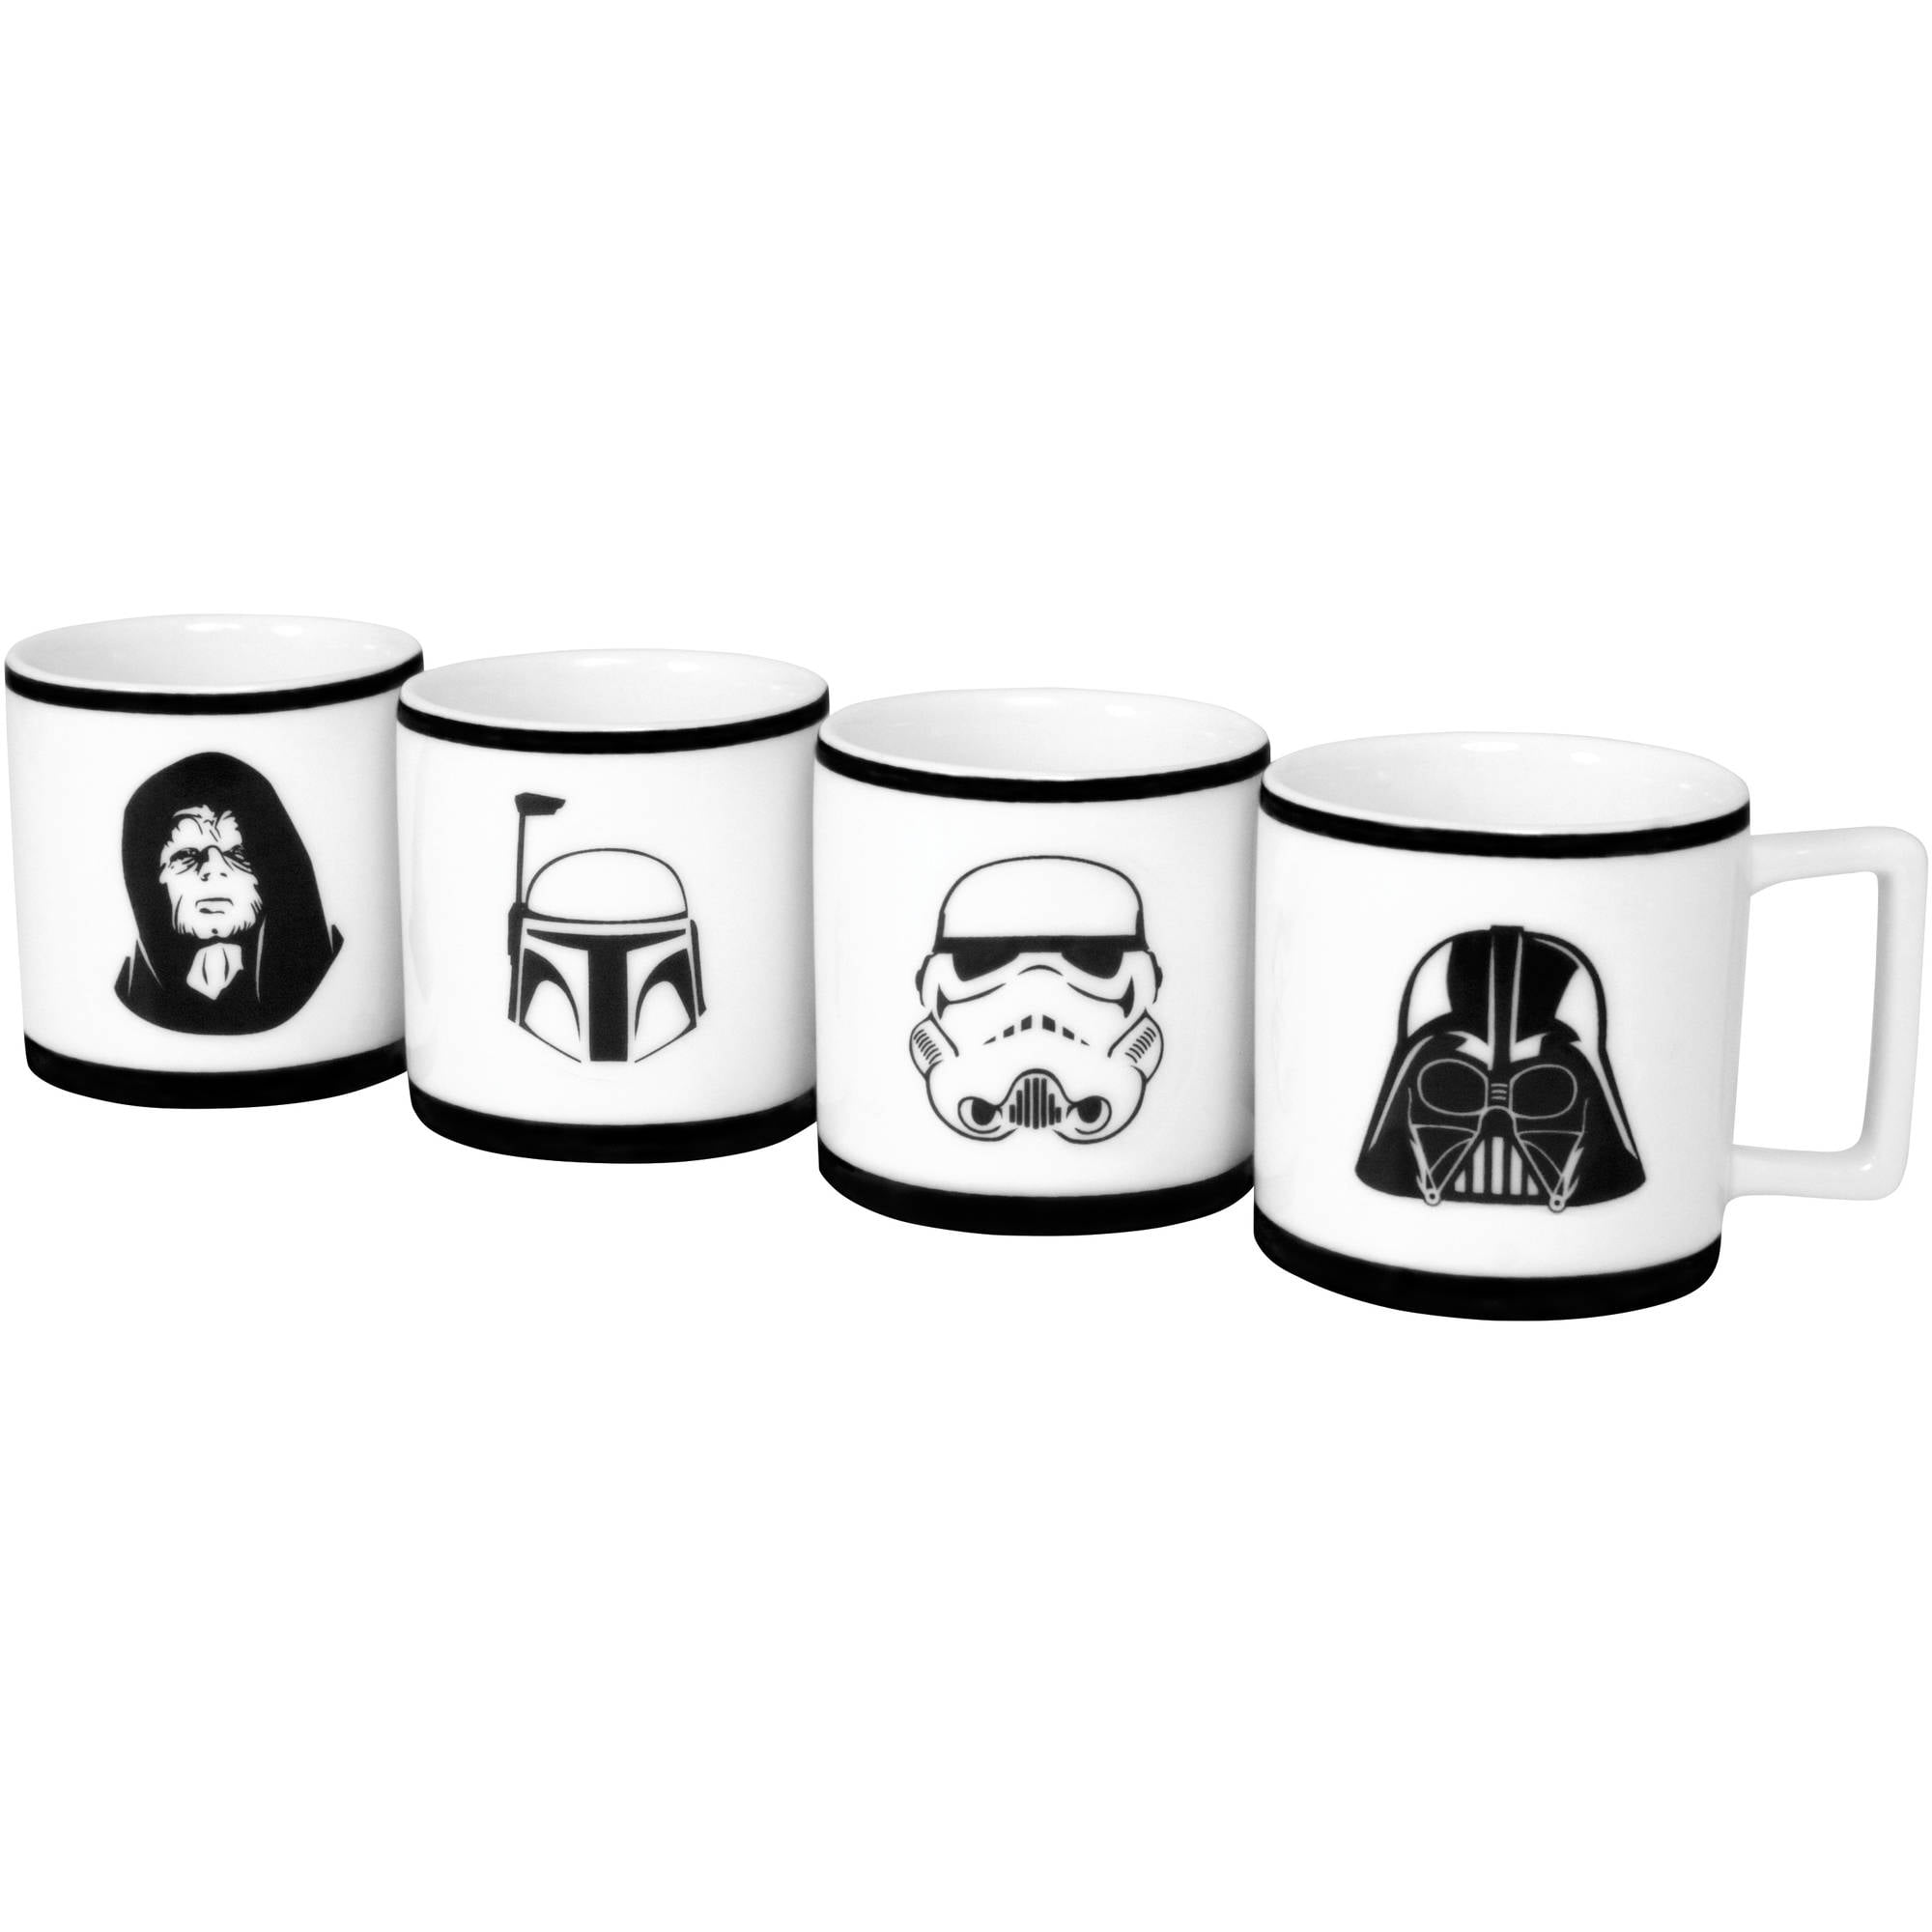 IWOOT Exclusive Star Wars The Force Awakens Espresso Mug Set